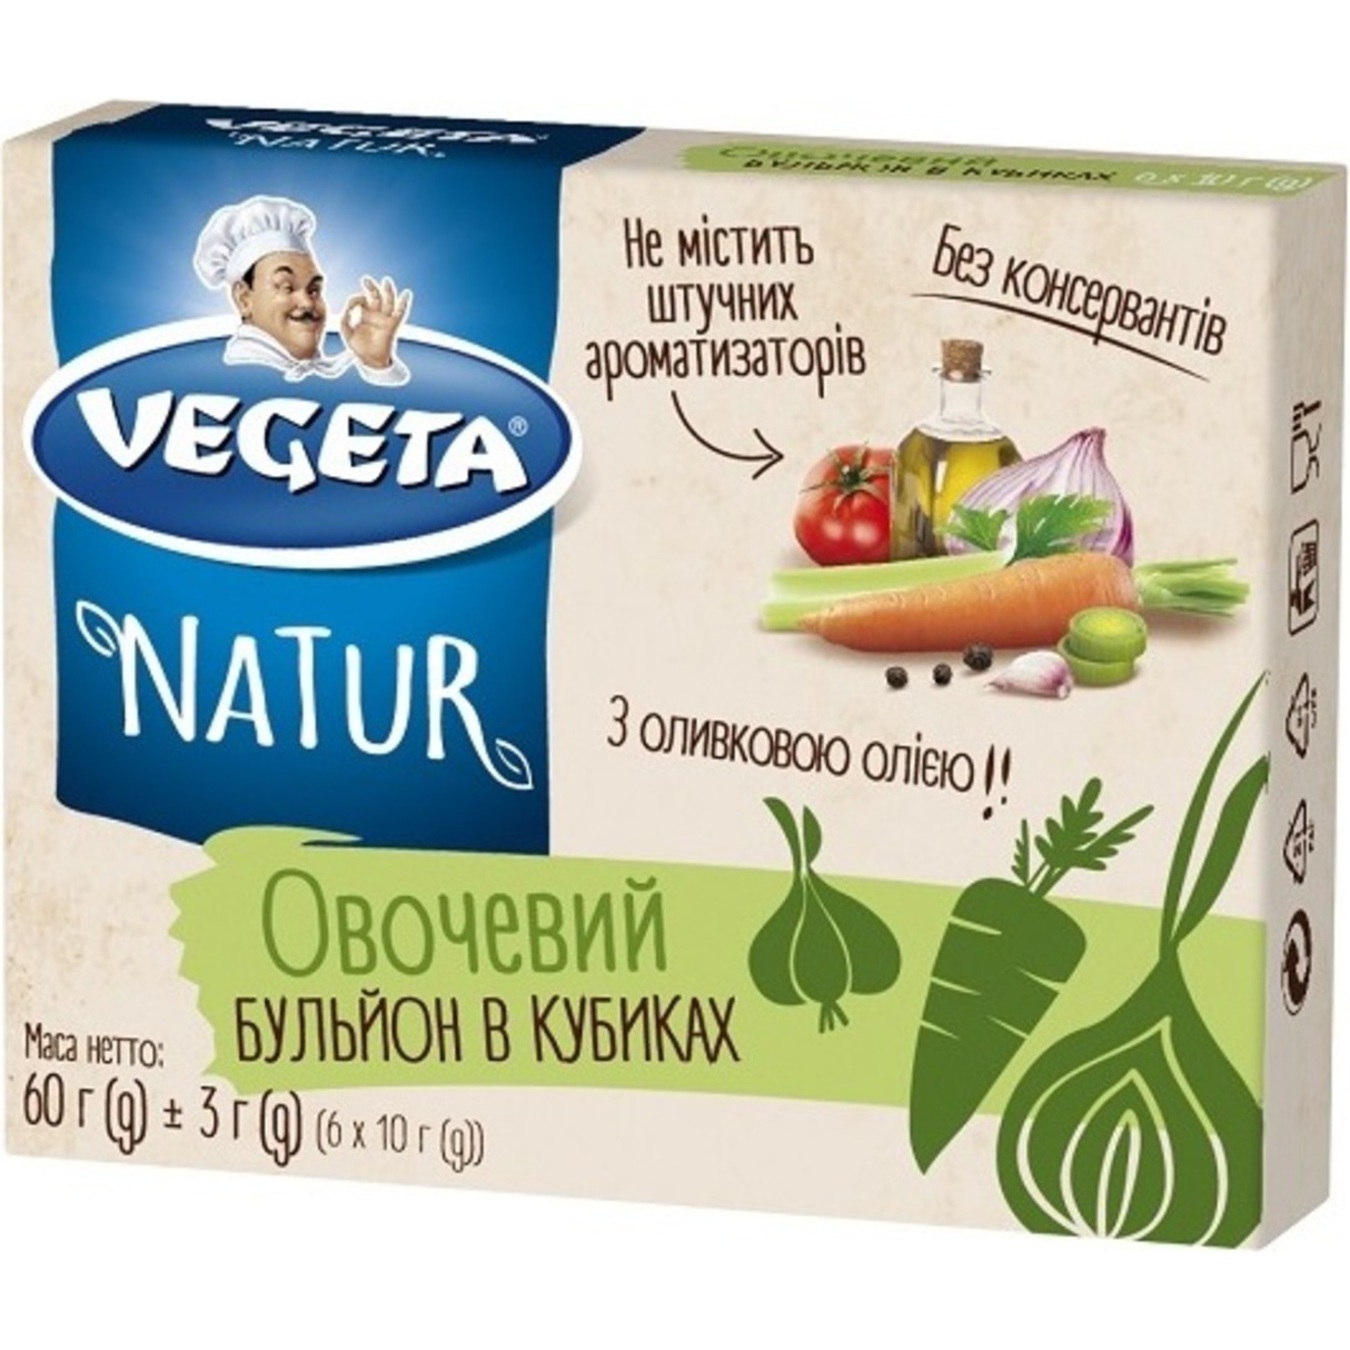 Vegeta Natur vegetable broth in cubes 6pcs 60g